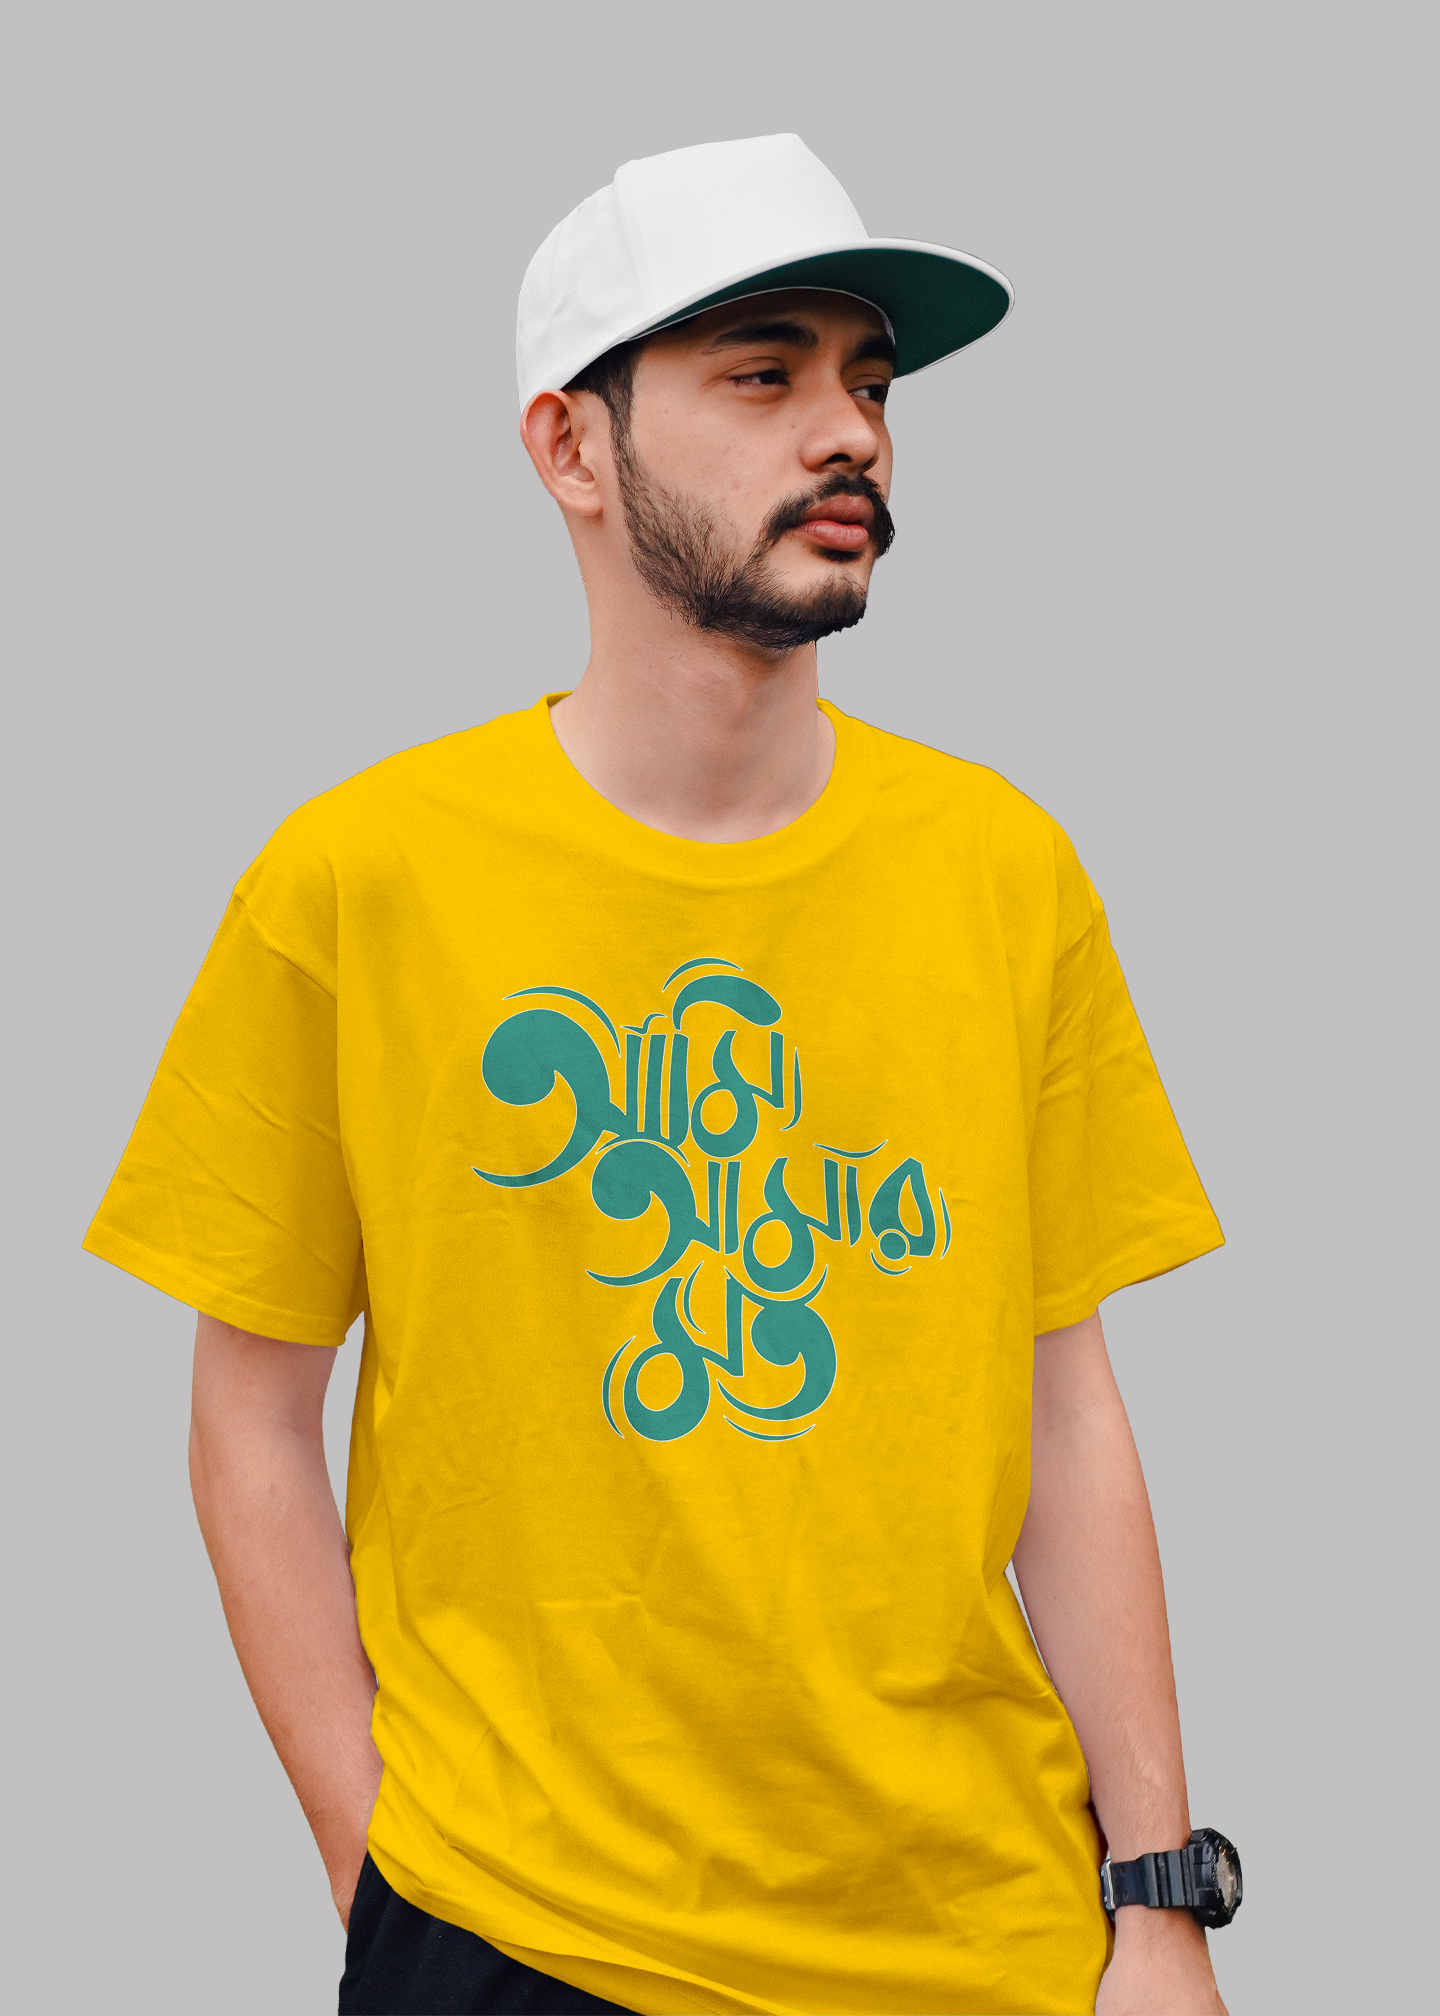 Ami amar moto bengali Printed Half Sleeve Premium Cotton T-shirt For Men